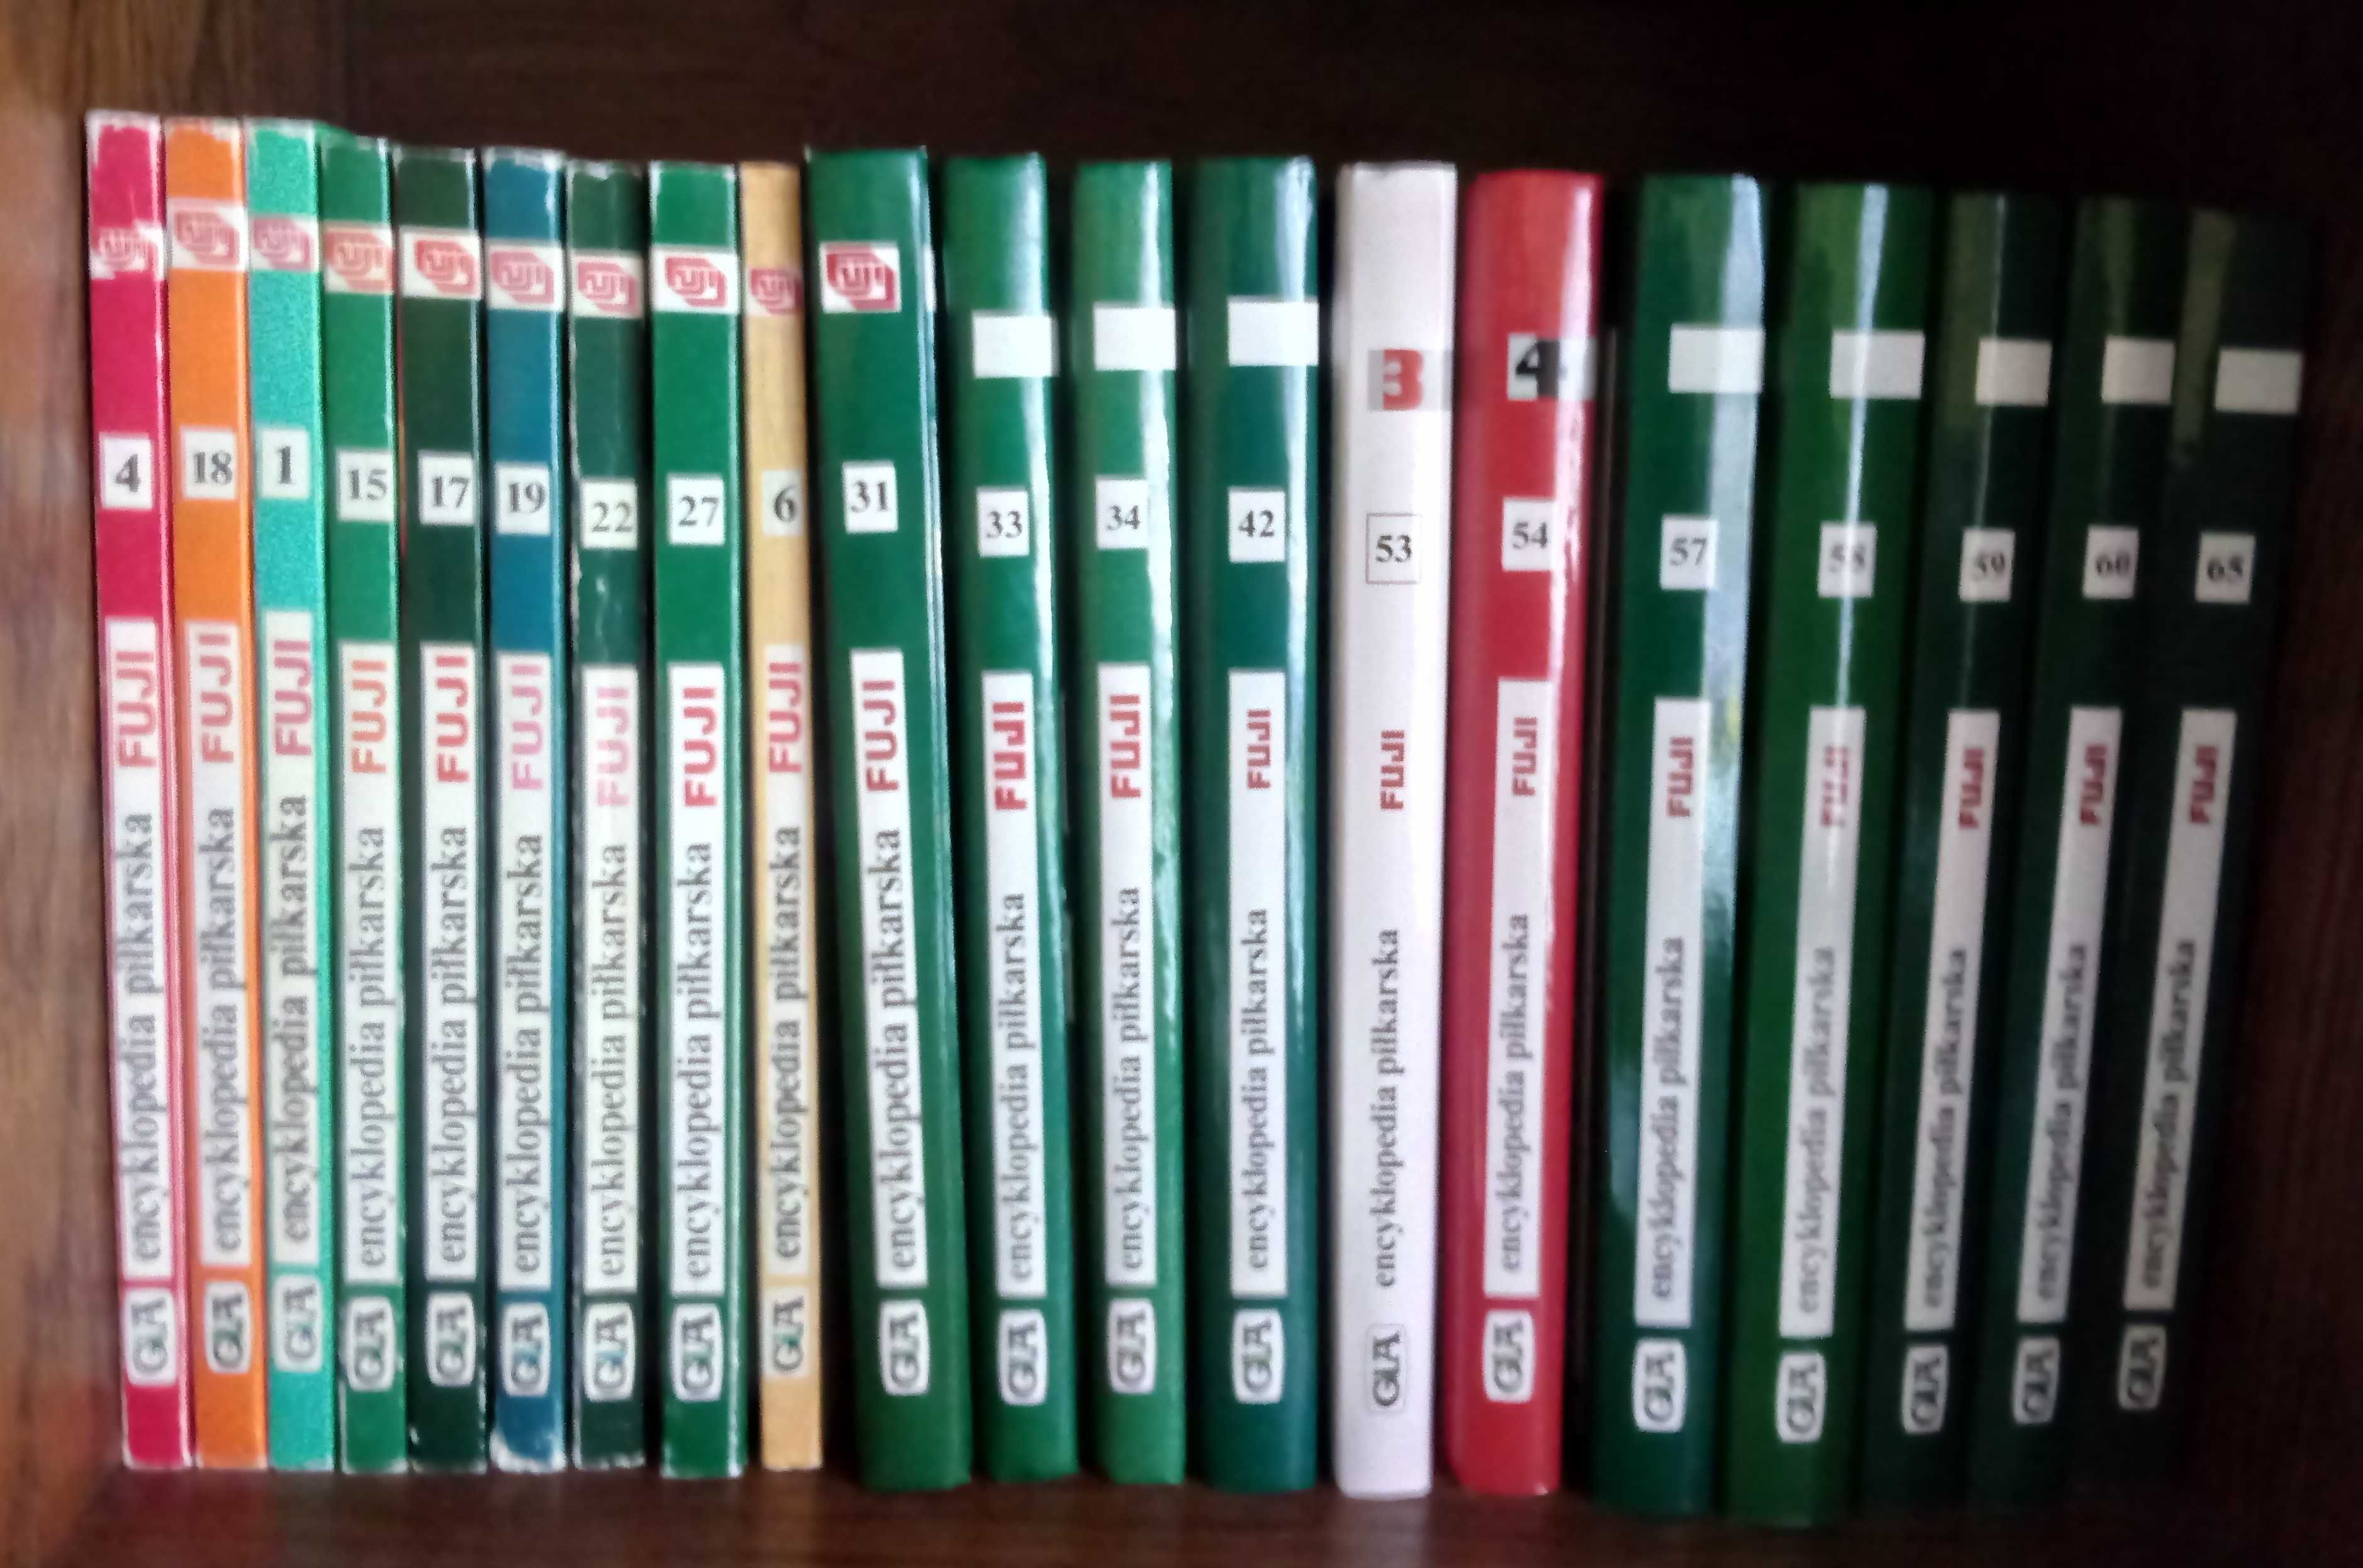 Encyklopedia Piłkarska Fuji i Kolekcja Klubów (Książki Sportowe)